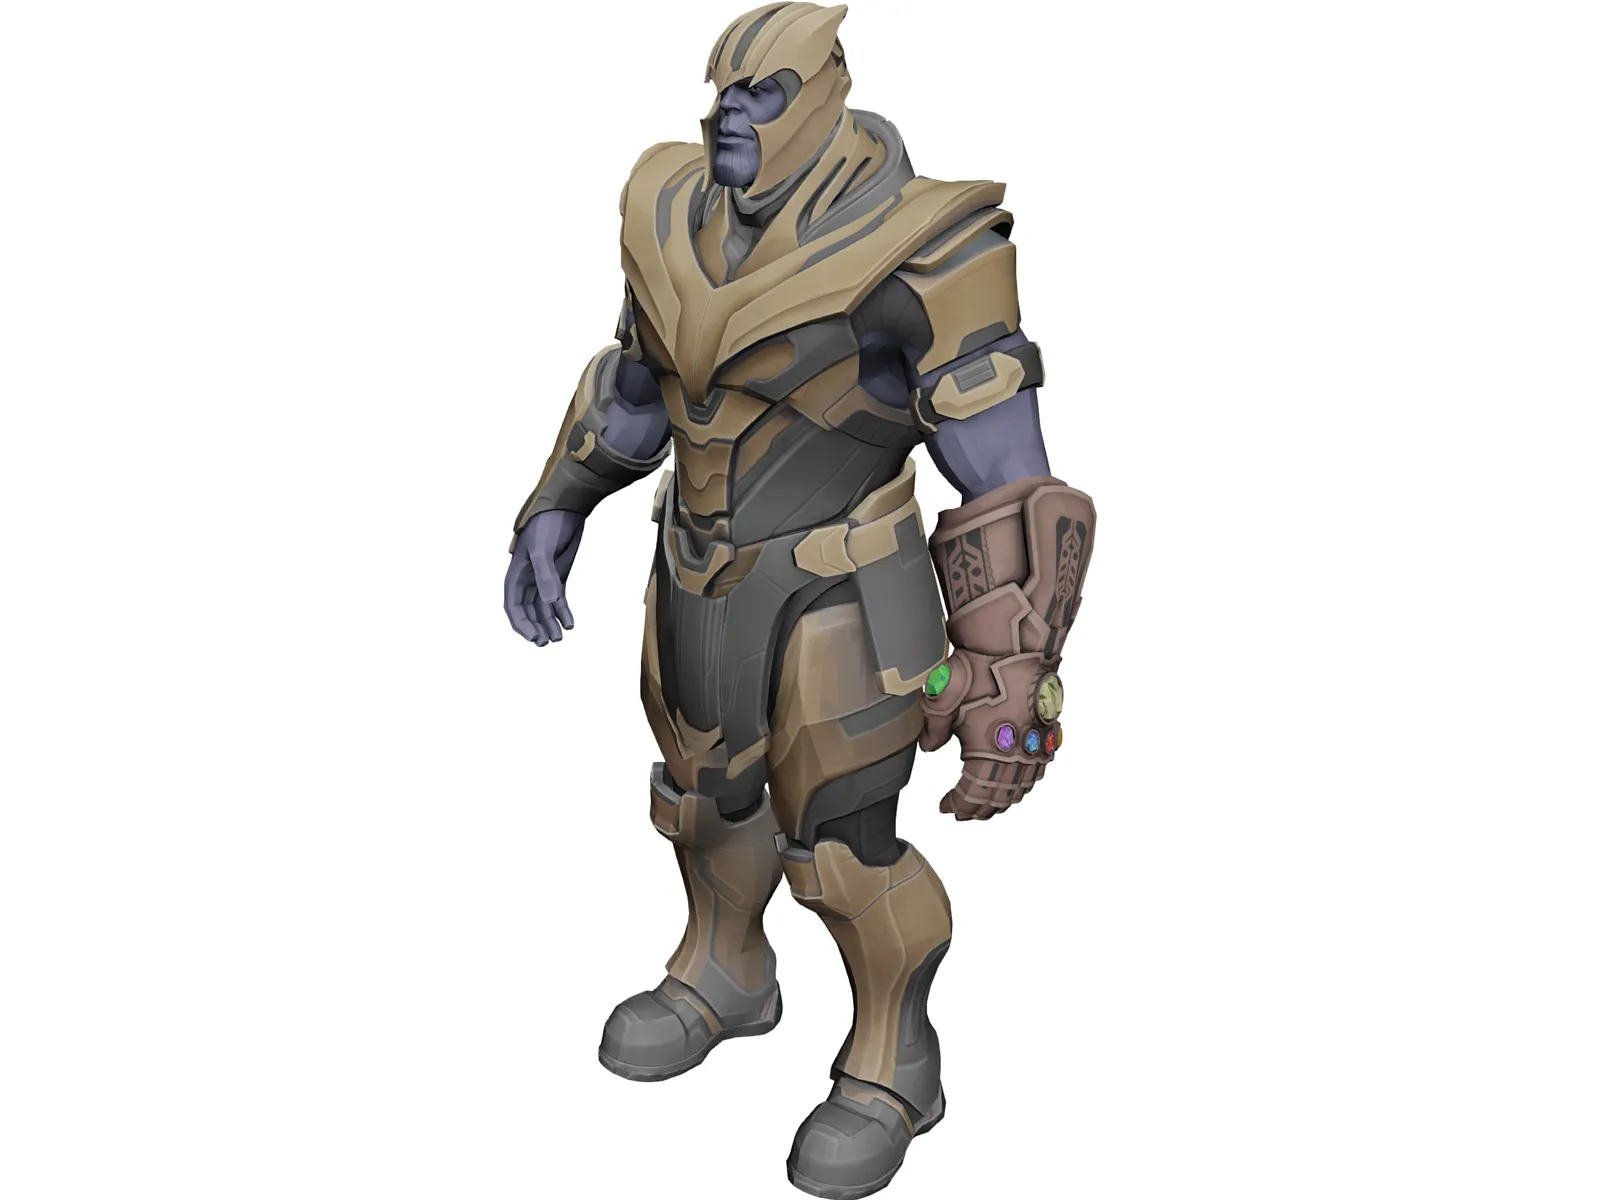 Thanos Armor 3D Model